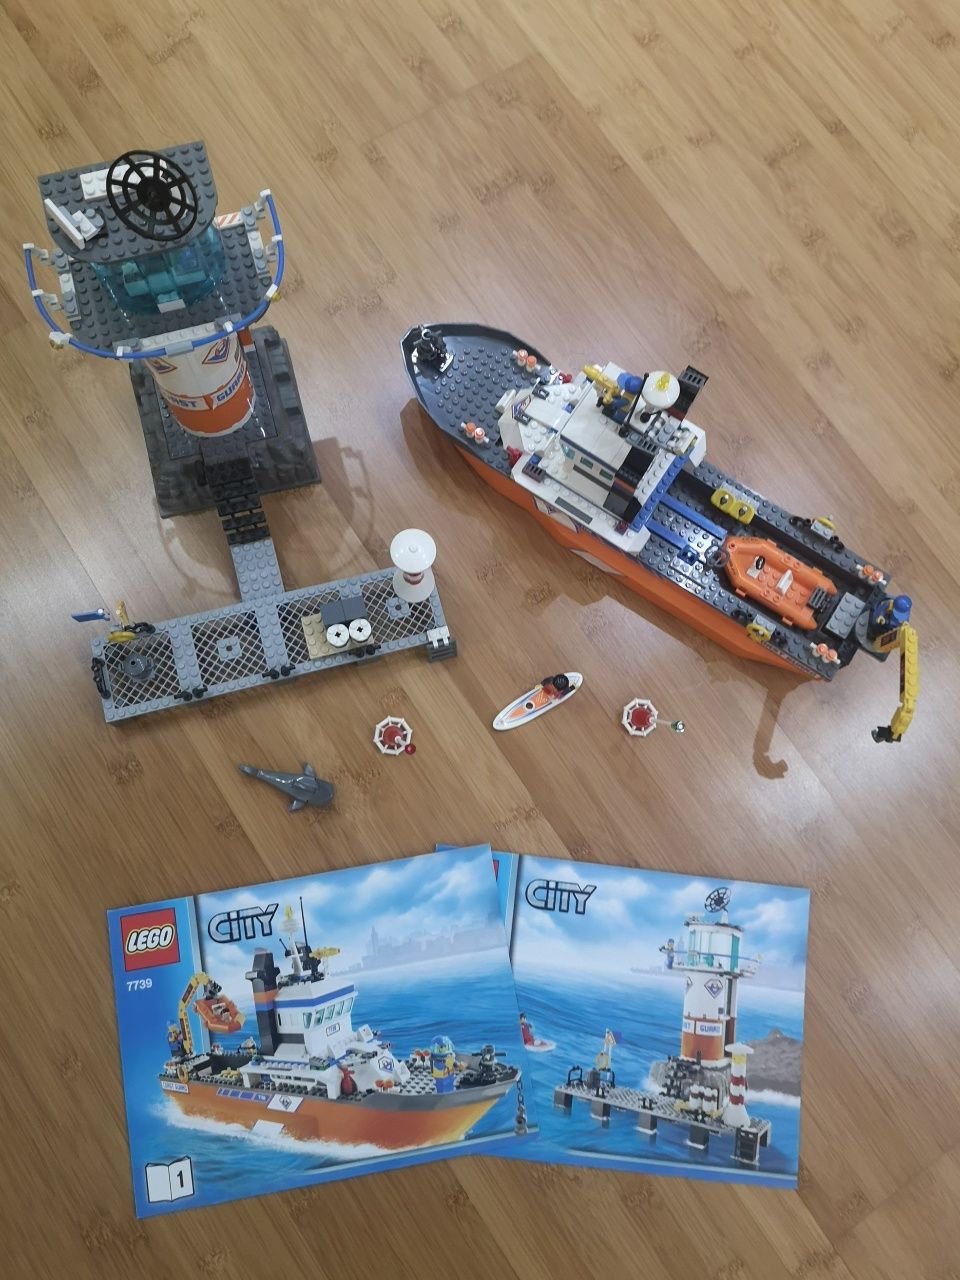 Lego City Coast Guard Patrol Boat 7739